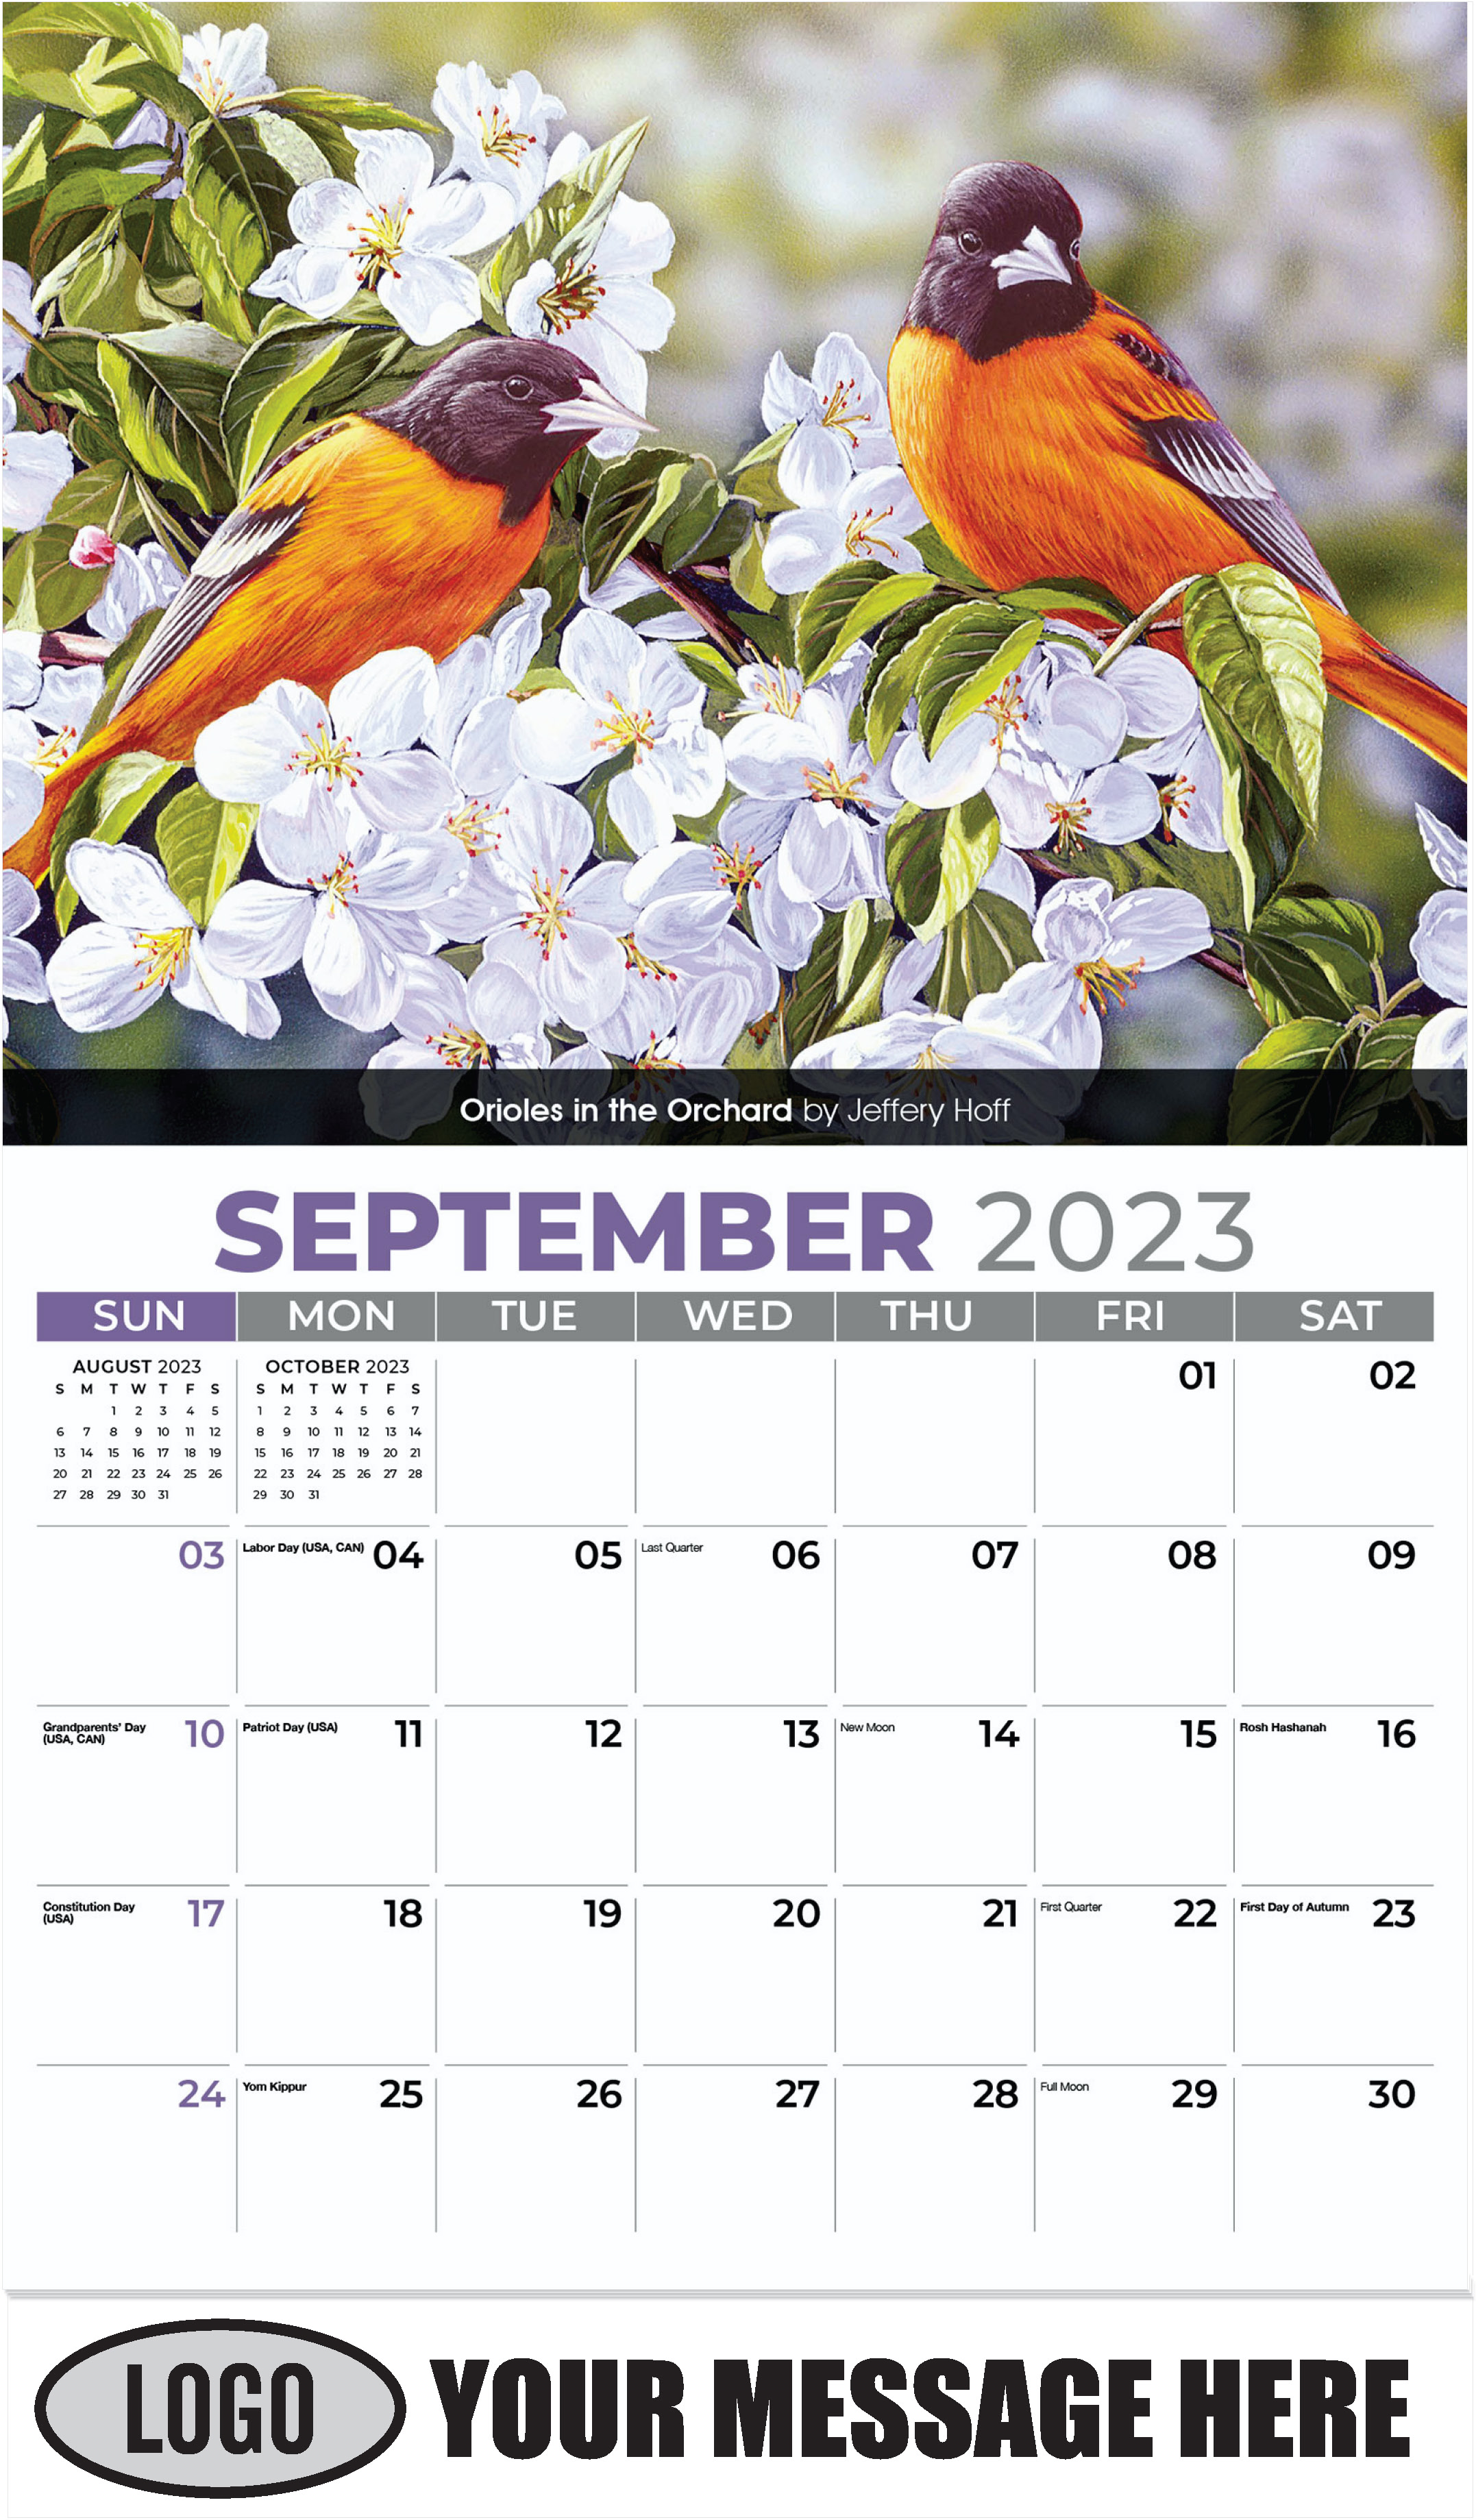 Orioles in the Orchard by Jeffery Hoff - September - Garden Birds 2023 Promotional Calendar